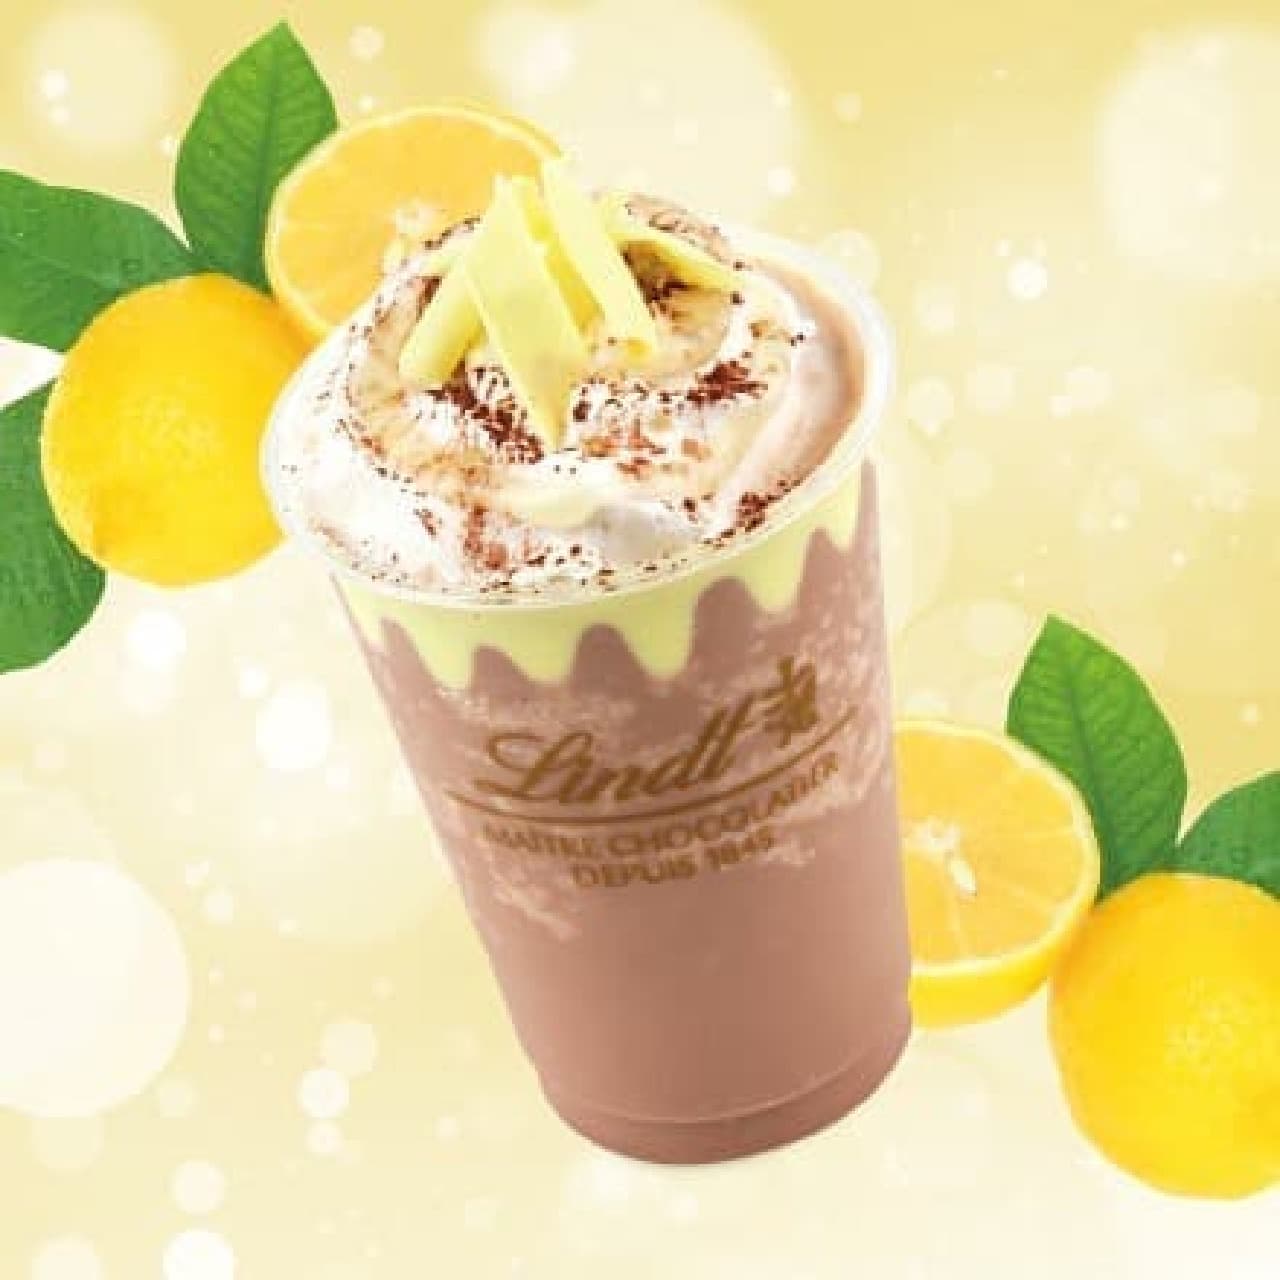 Linz Chocolat Cafe "Linz Milk Chocolate Lemon Ice Drink"